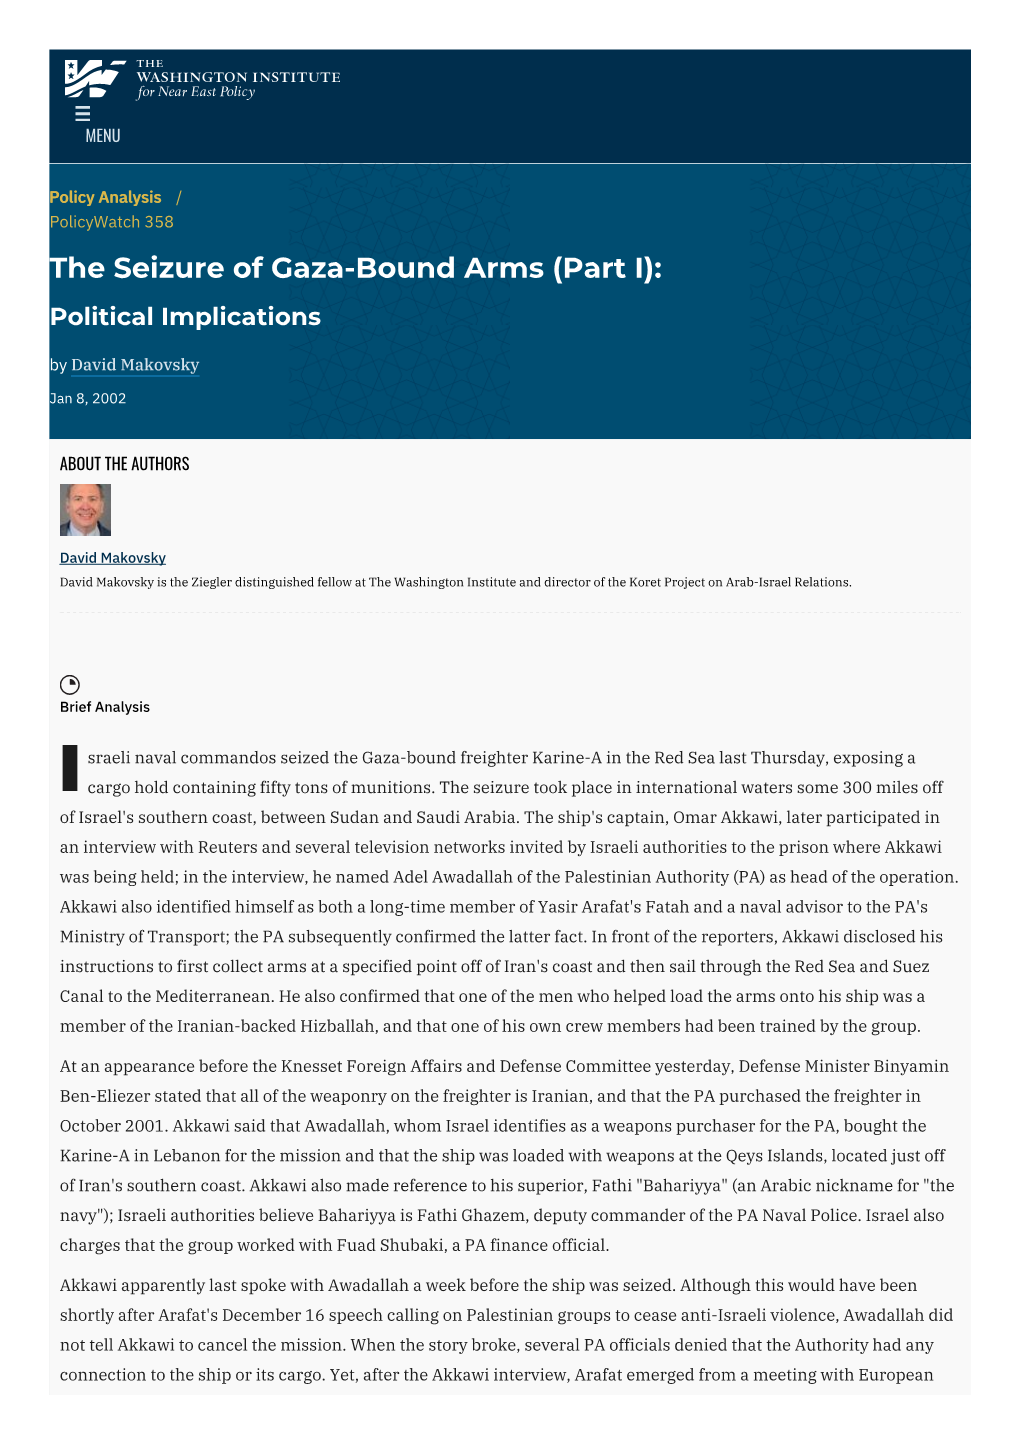 The Seizure of Gaza-Bound Arms (Part I): Political Implications by David Makovsky